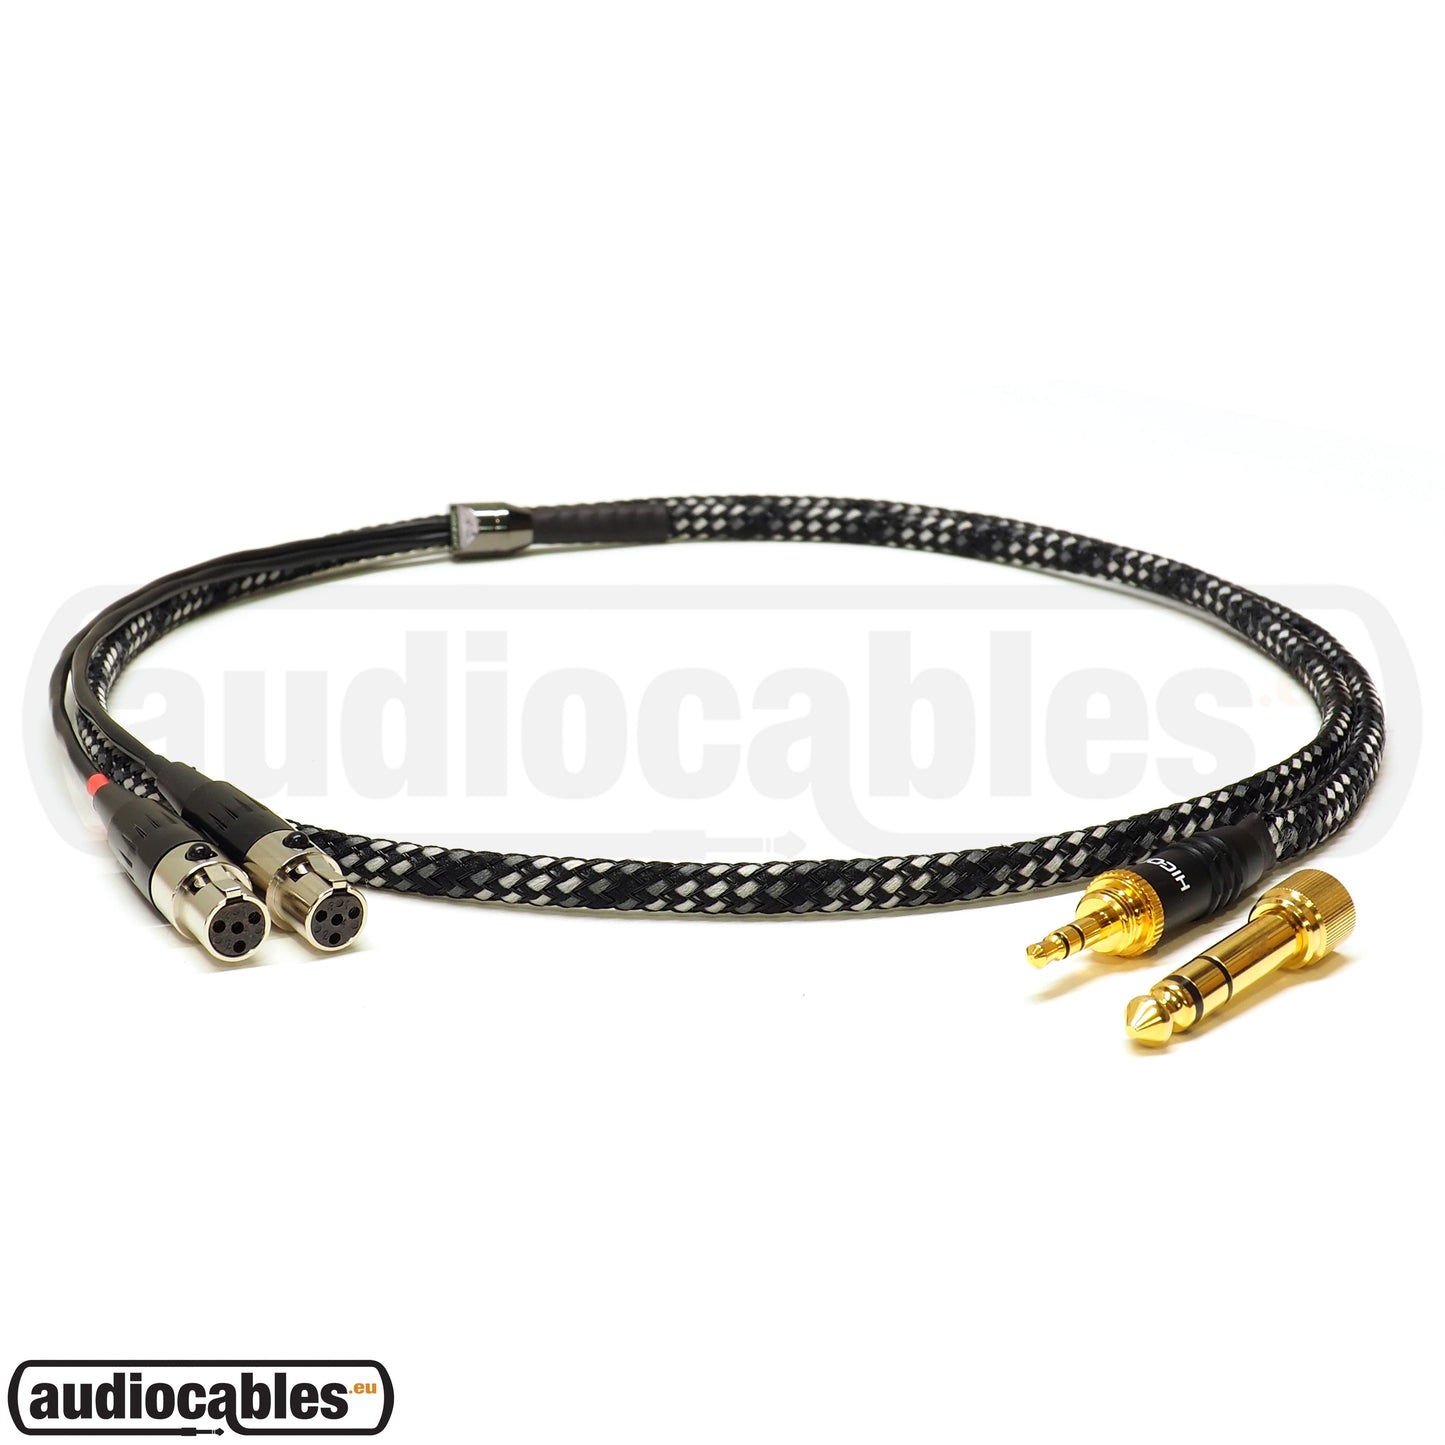 Mogami Cable for Audeze Headphones (Braided, dual 4pin mini xlr)